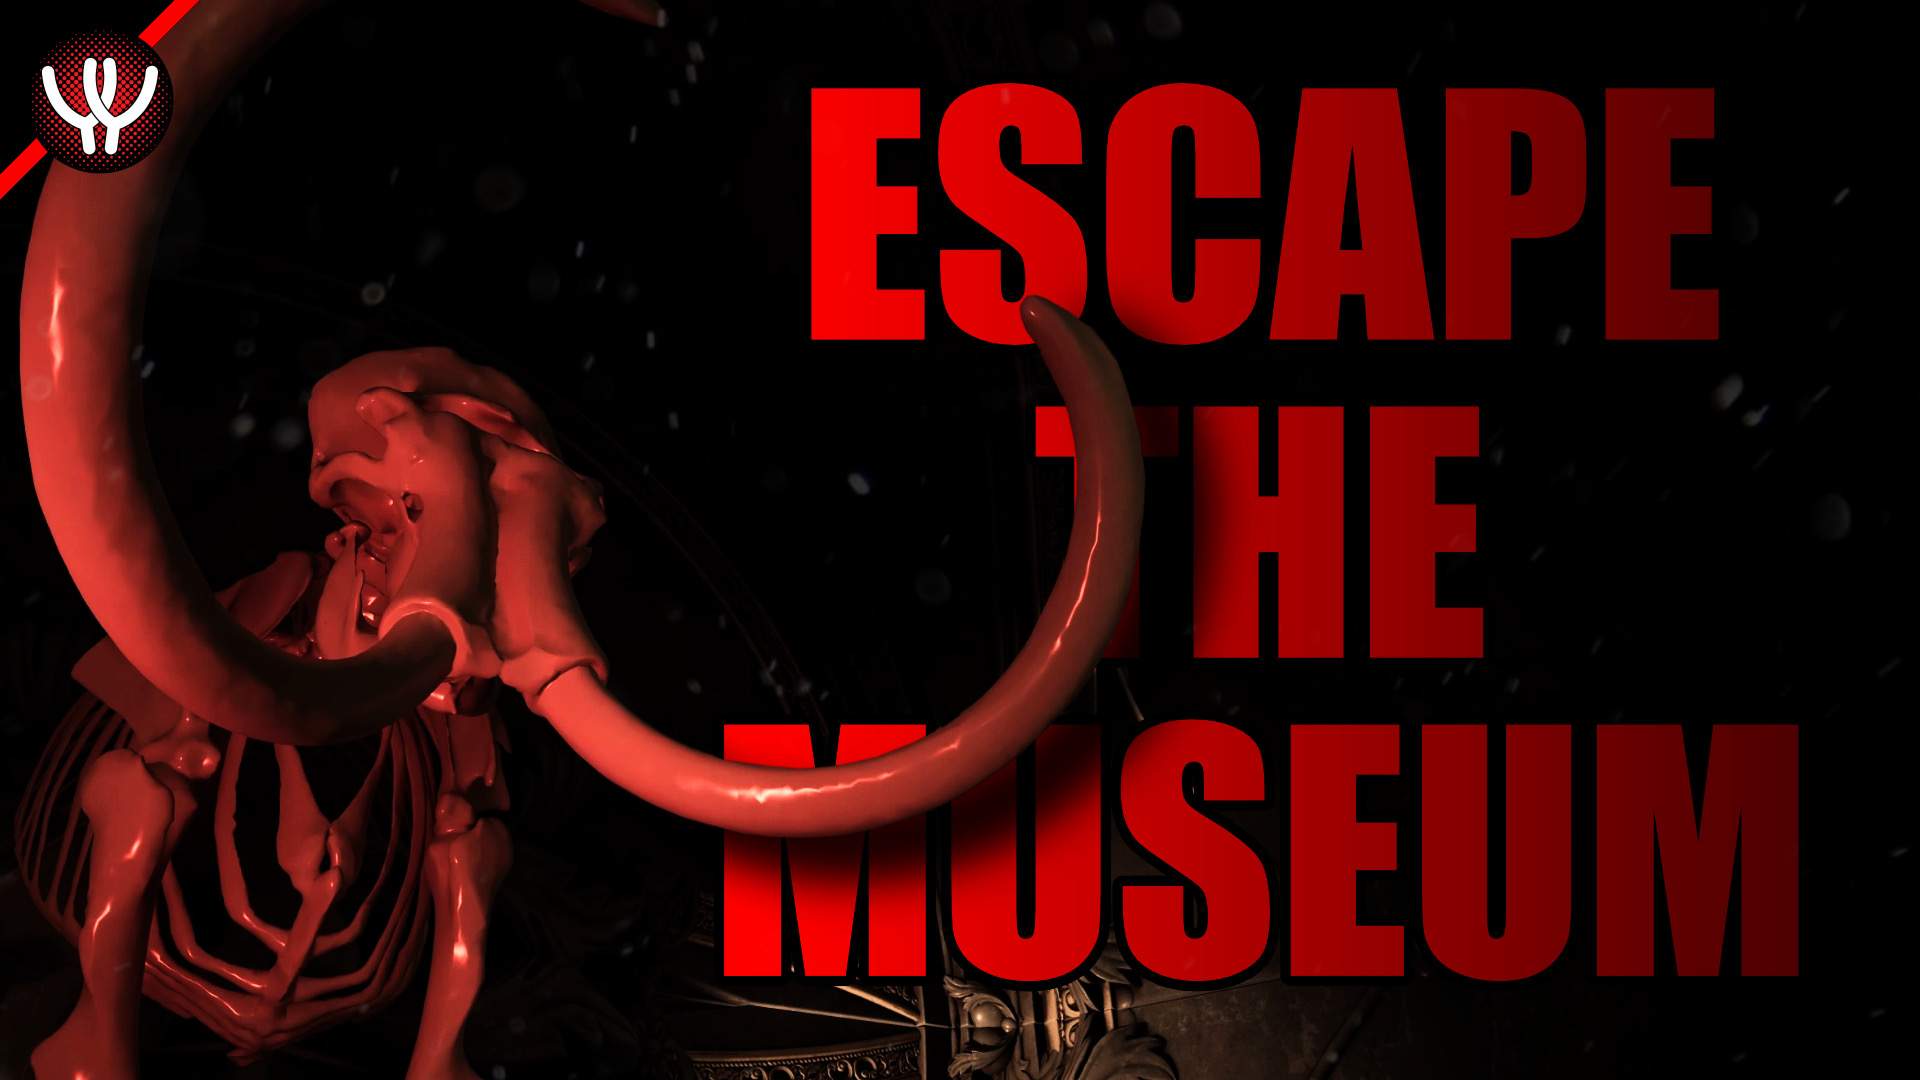 【HORROR】Museum Escape